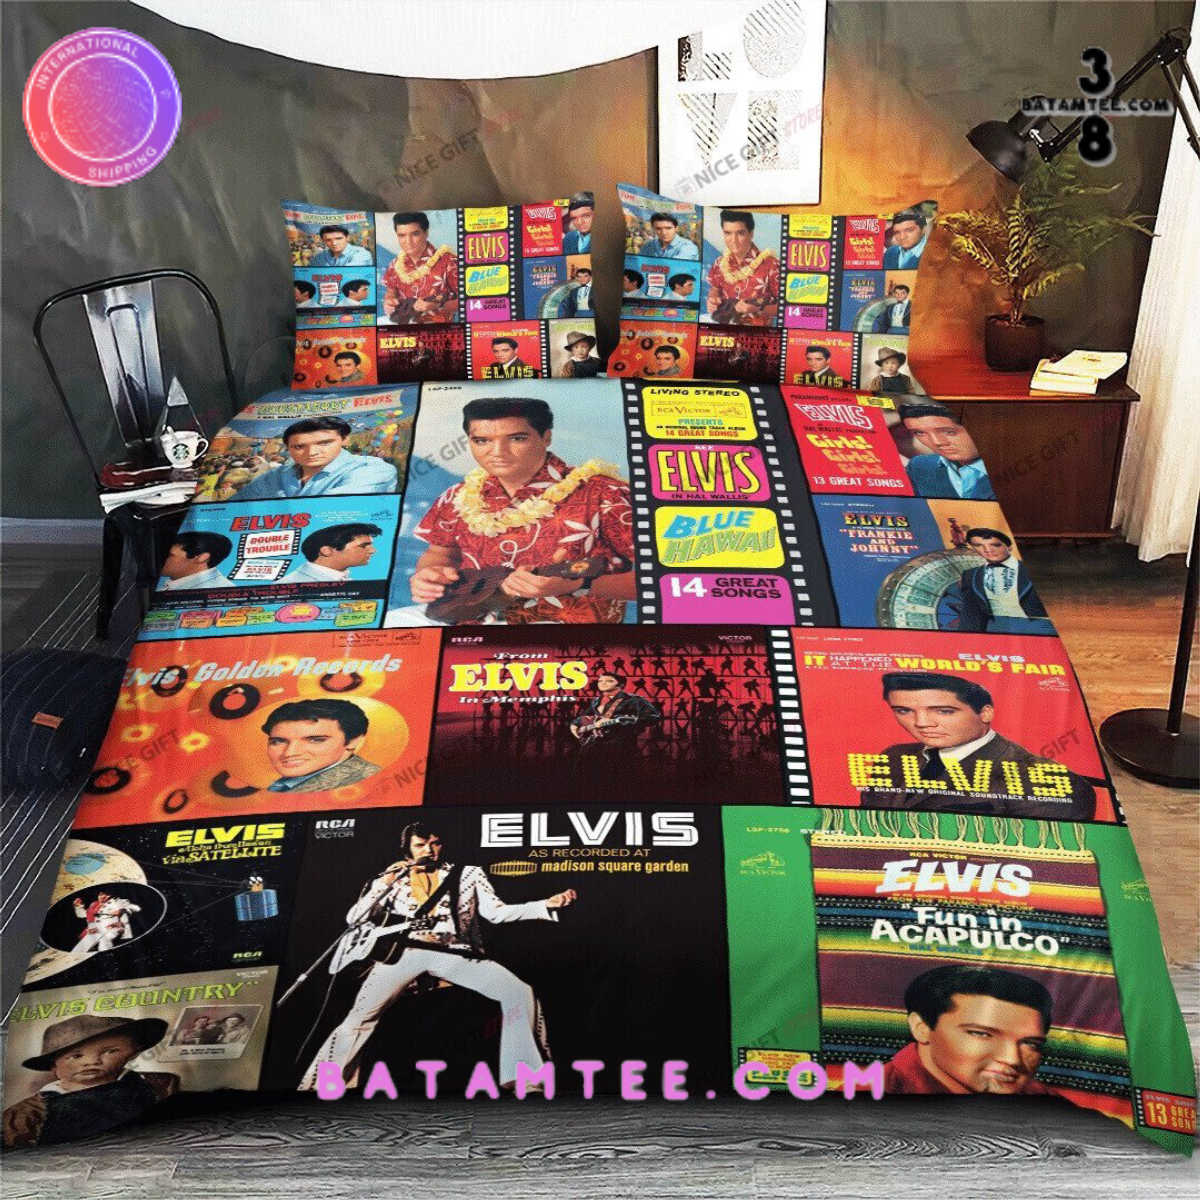 Elvis Presley Super Star Bedding Set's Overview - Batamtee Shop - Threads & Totes: Your Style Destination